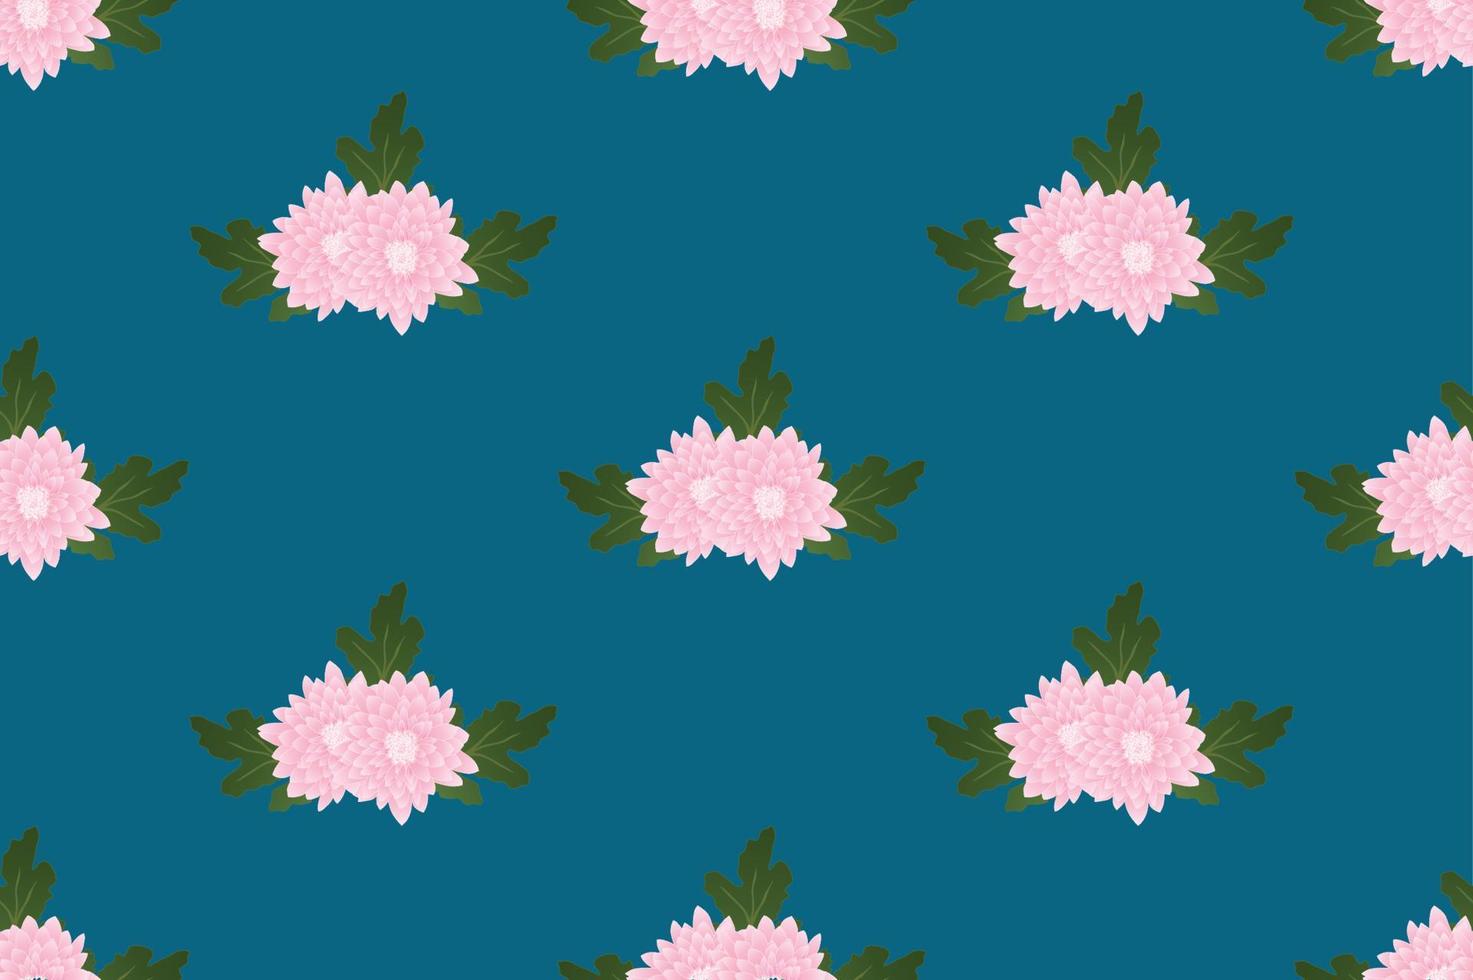 rosa krysantemum på indigo blå bakgrund vektor